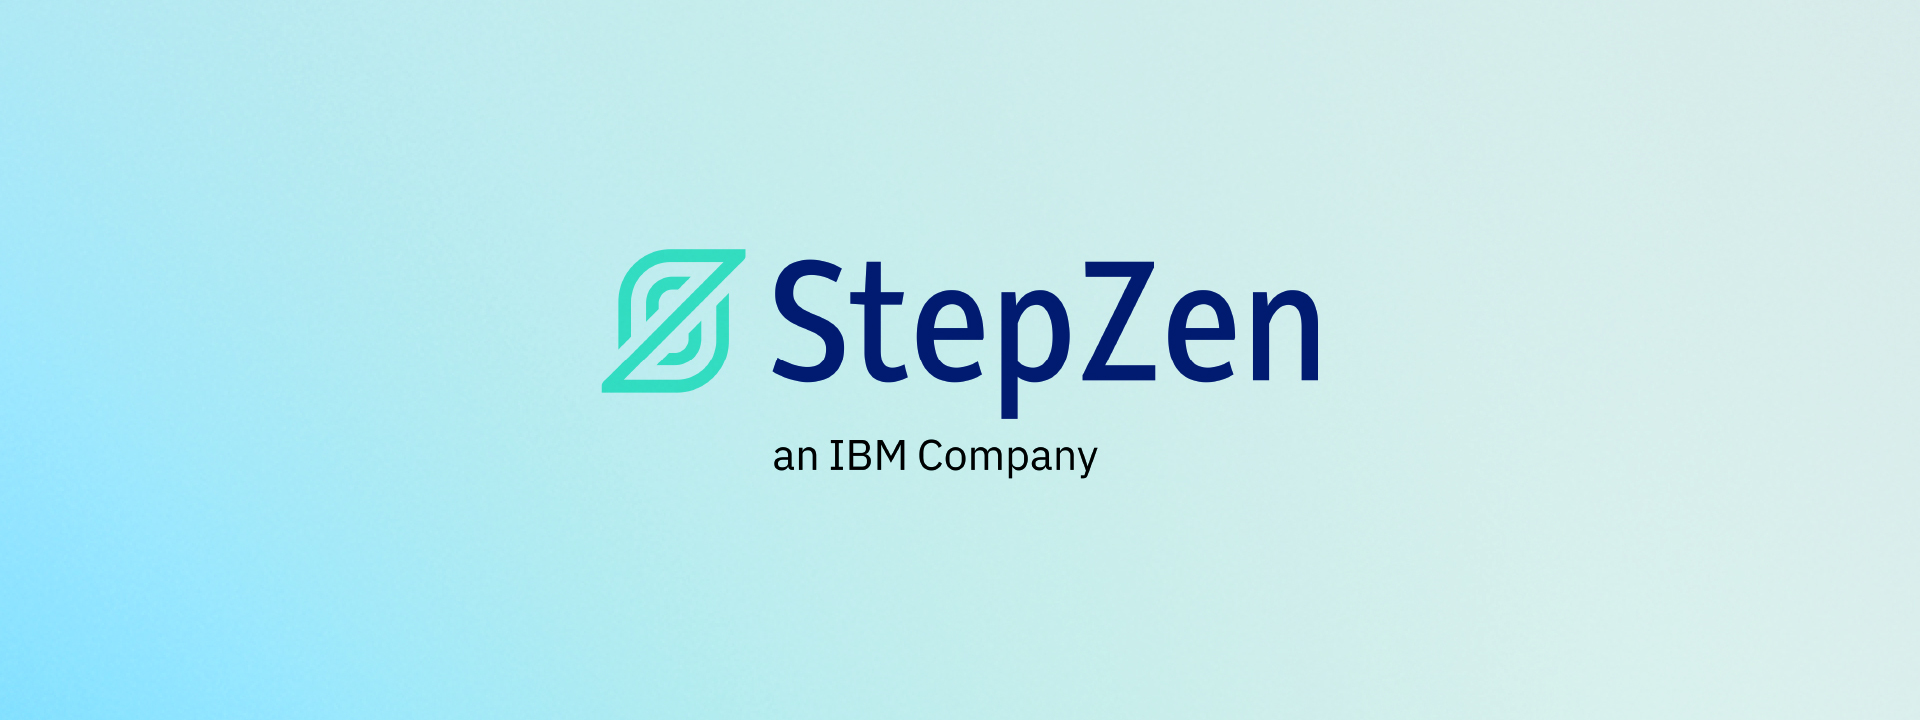 StepZen is now an IBM company